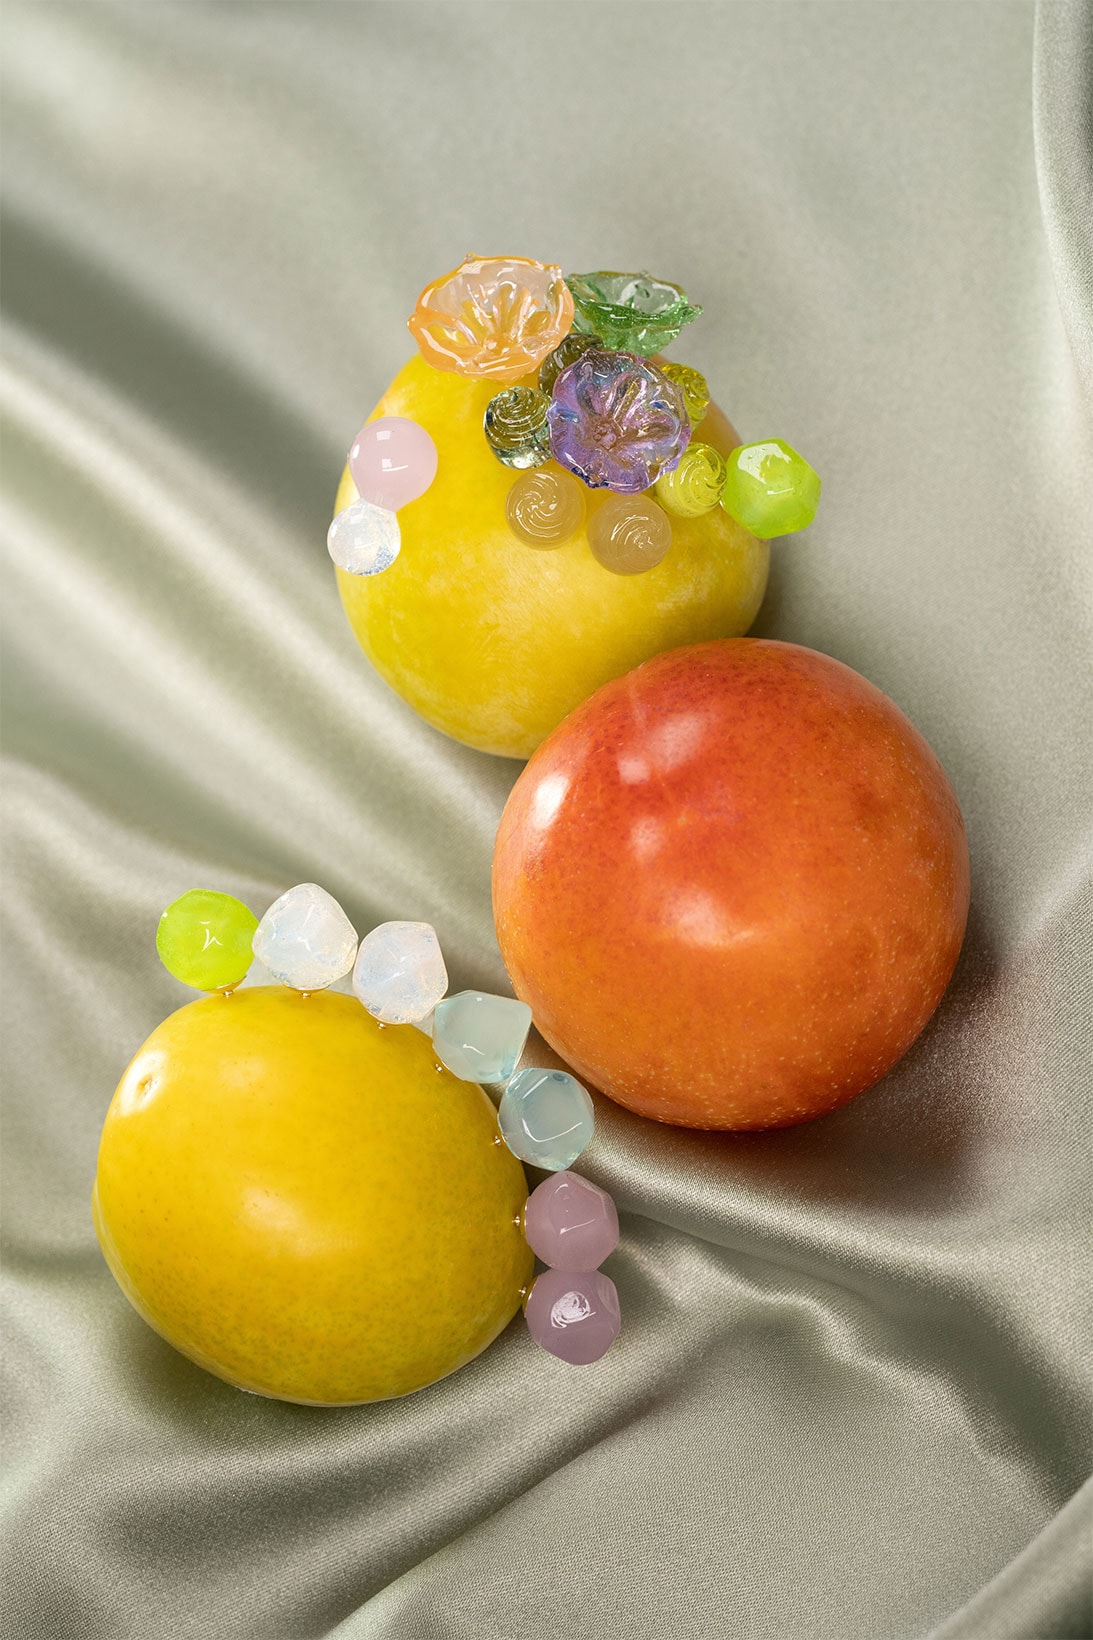 keane brooklyn glass jewelry brand earrings accessories fruits apple pomegranate